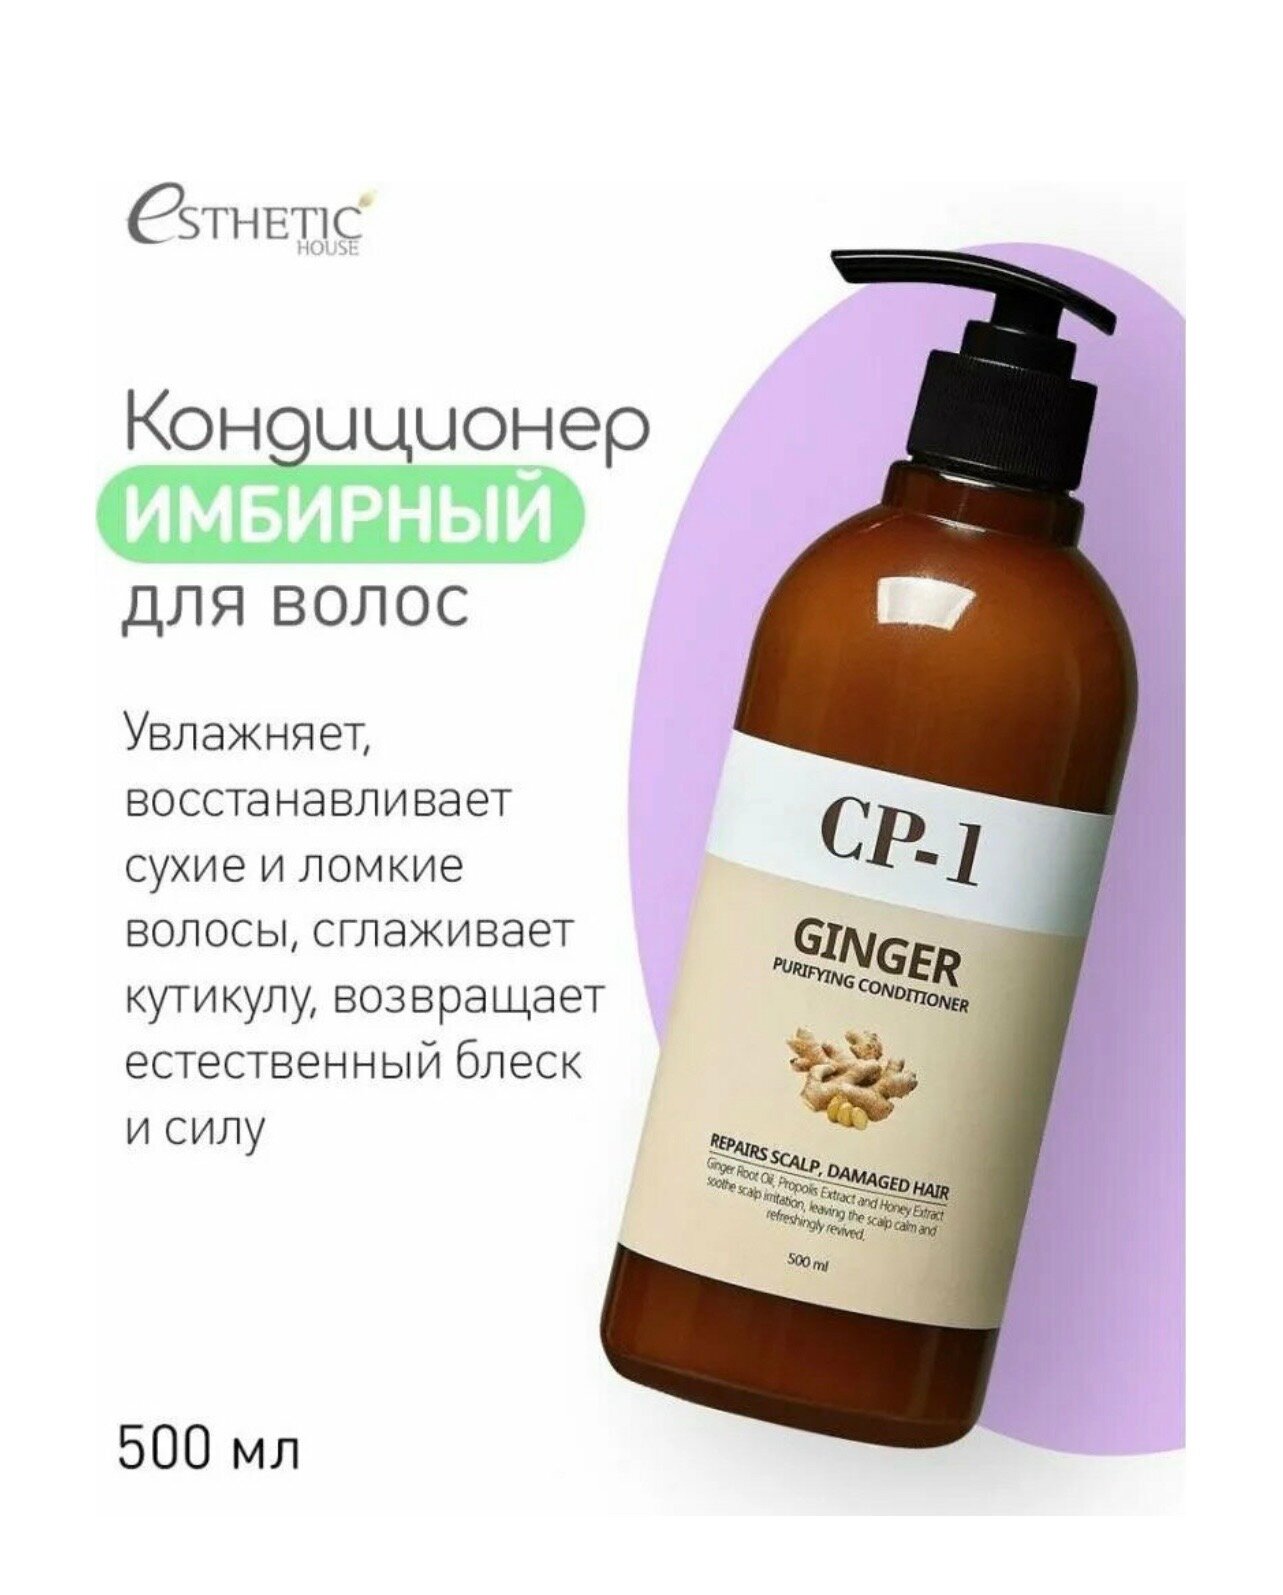 Кондиционер для волос CP-1 имбирный - Ginger Purifying Conditioner, 500 мл